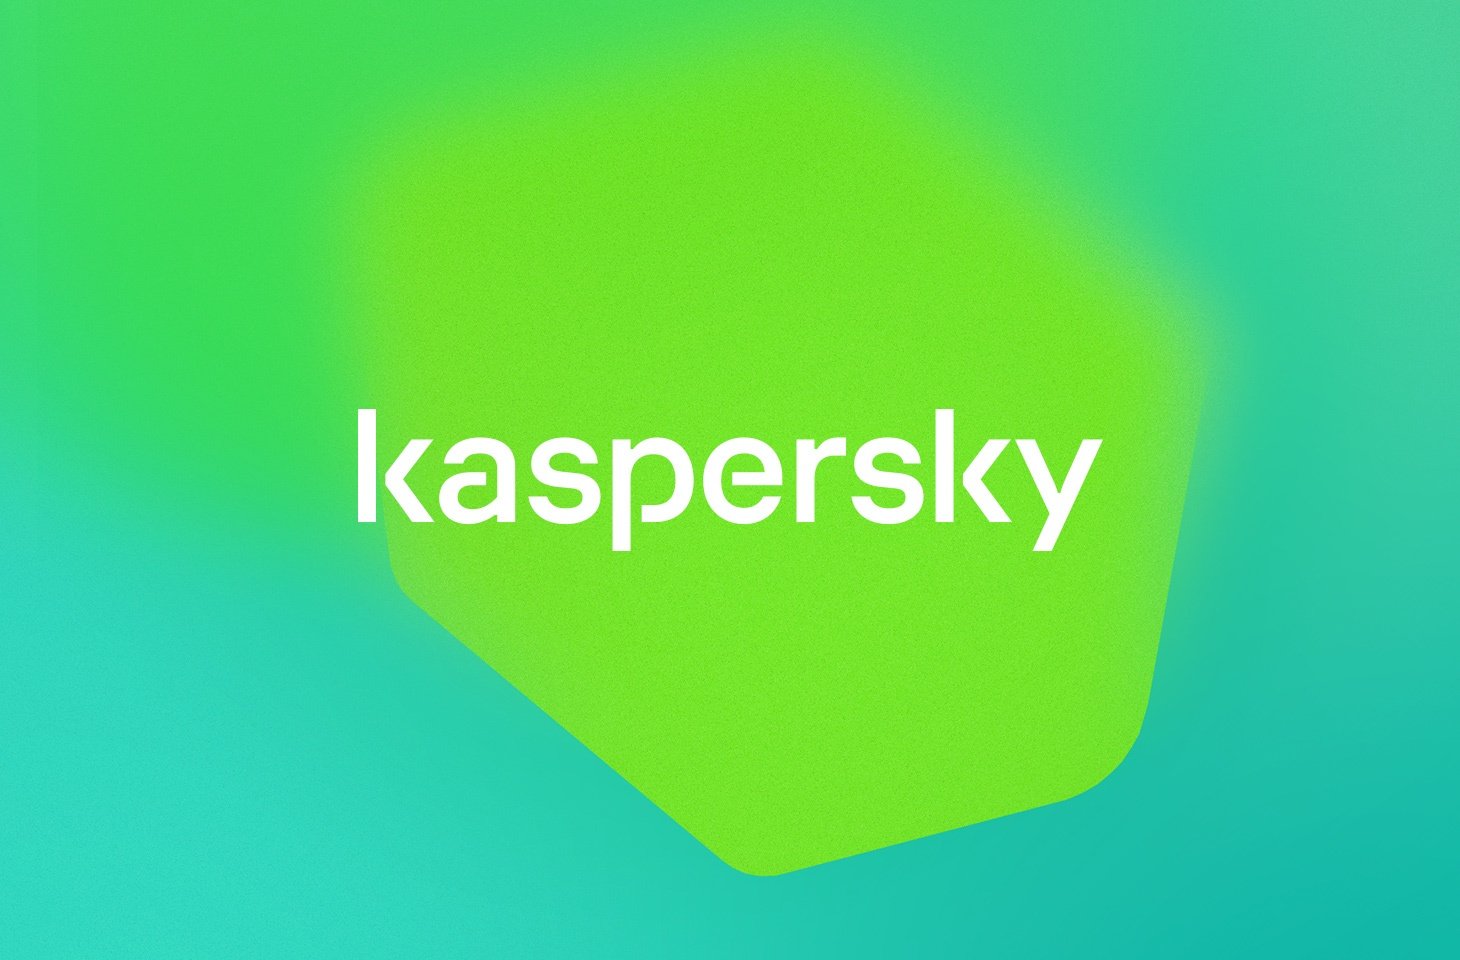 El antivirus ruso Kaspersky multiplica el riesgo de ciberataque